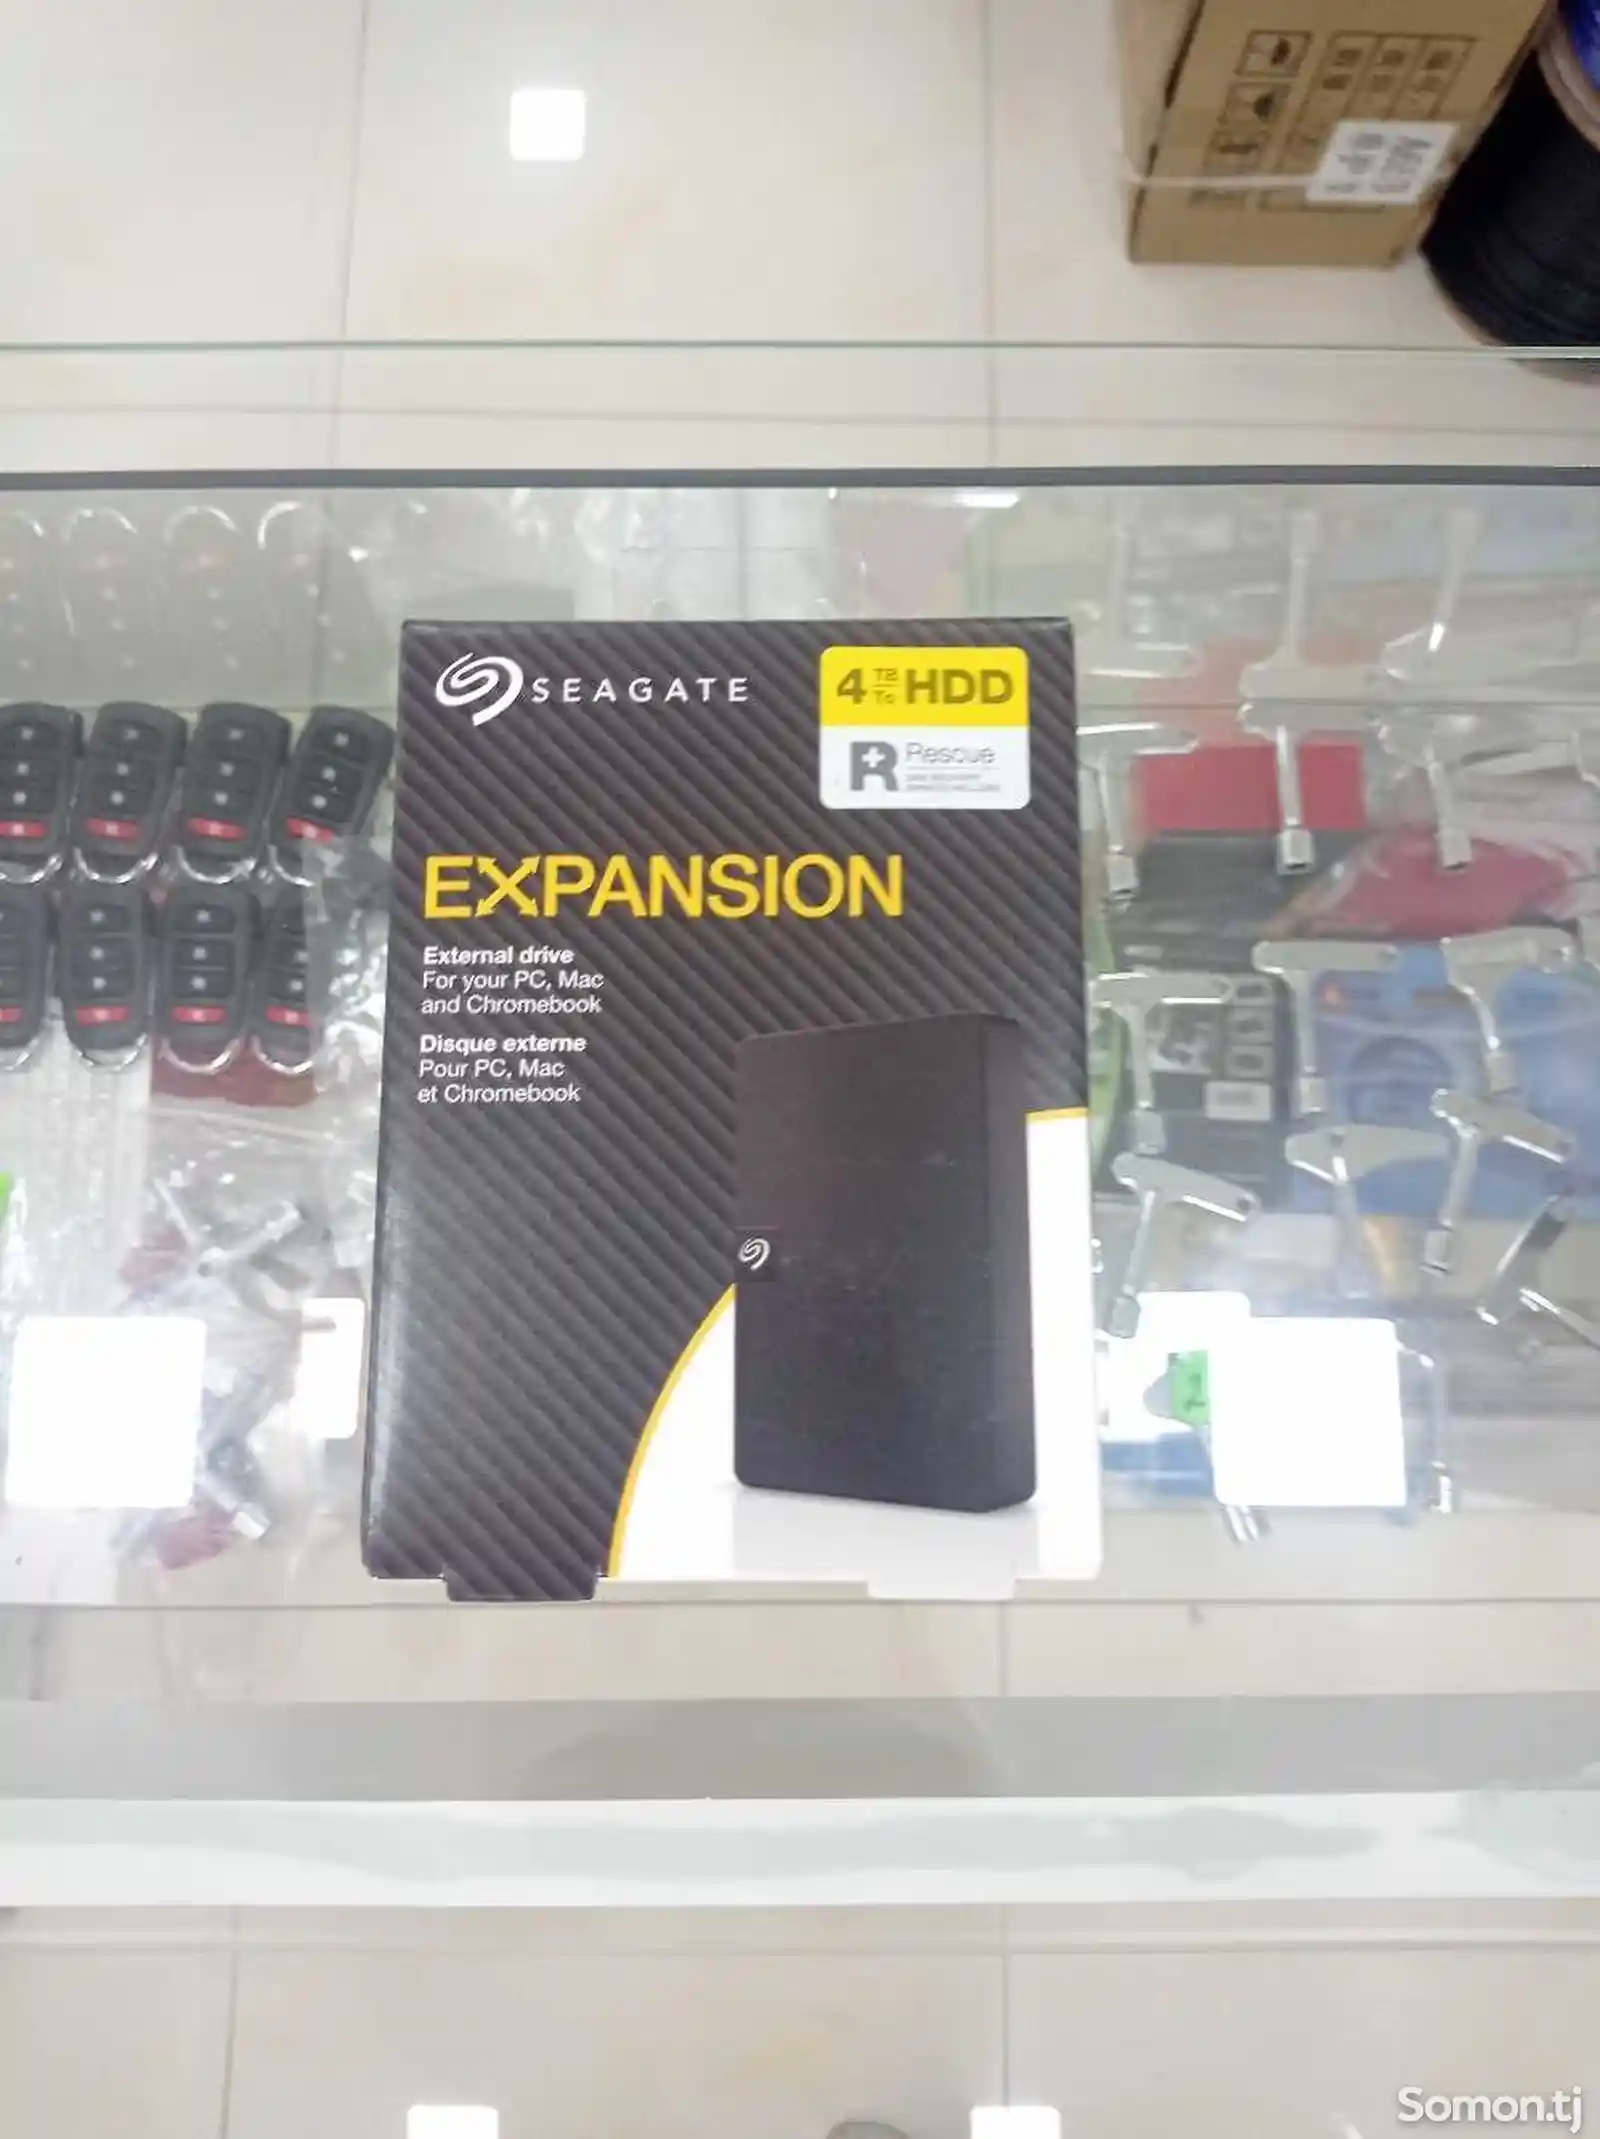 Expansion 4 TB HDD жёсткий диск